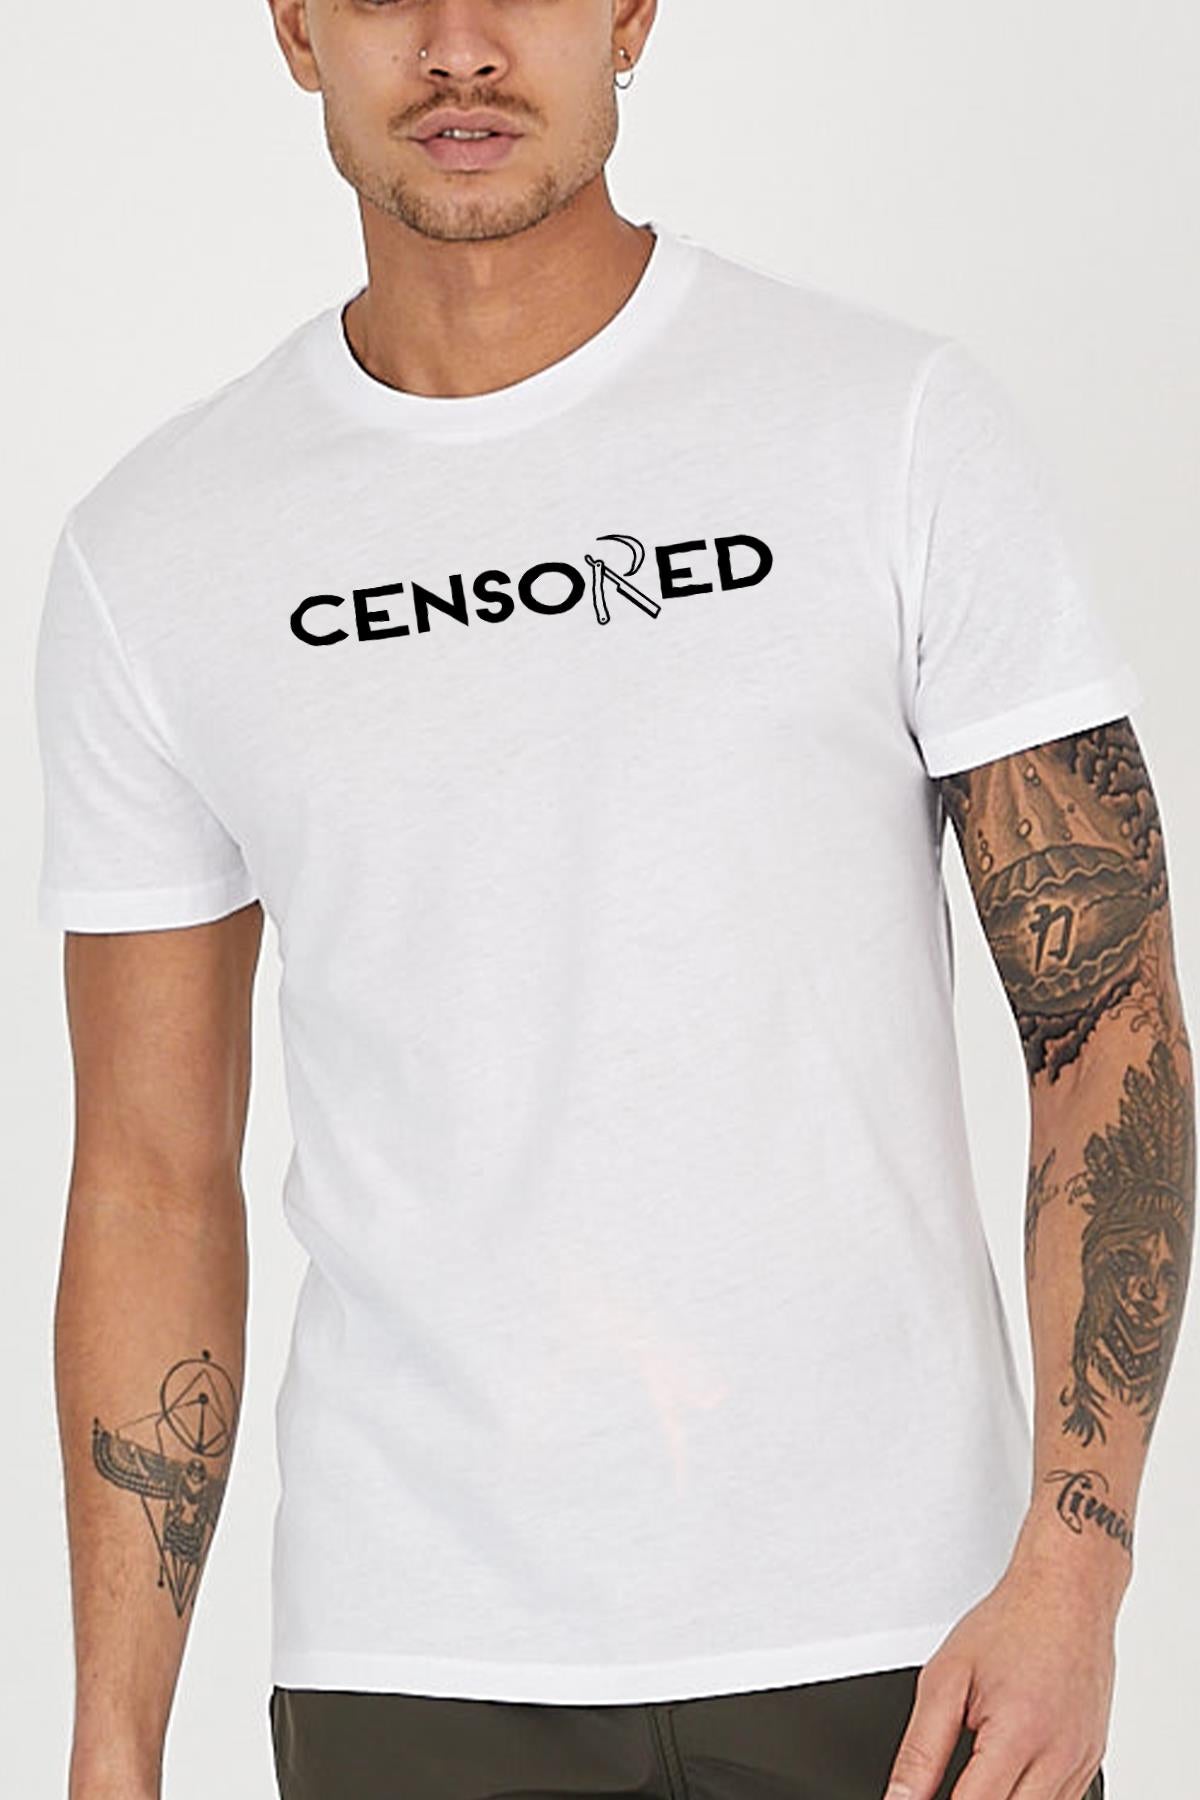 Censored printed Crew Neck men's t -shirt